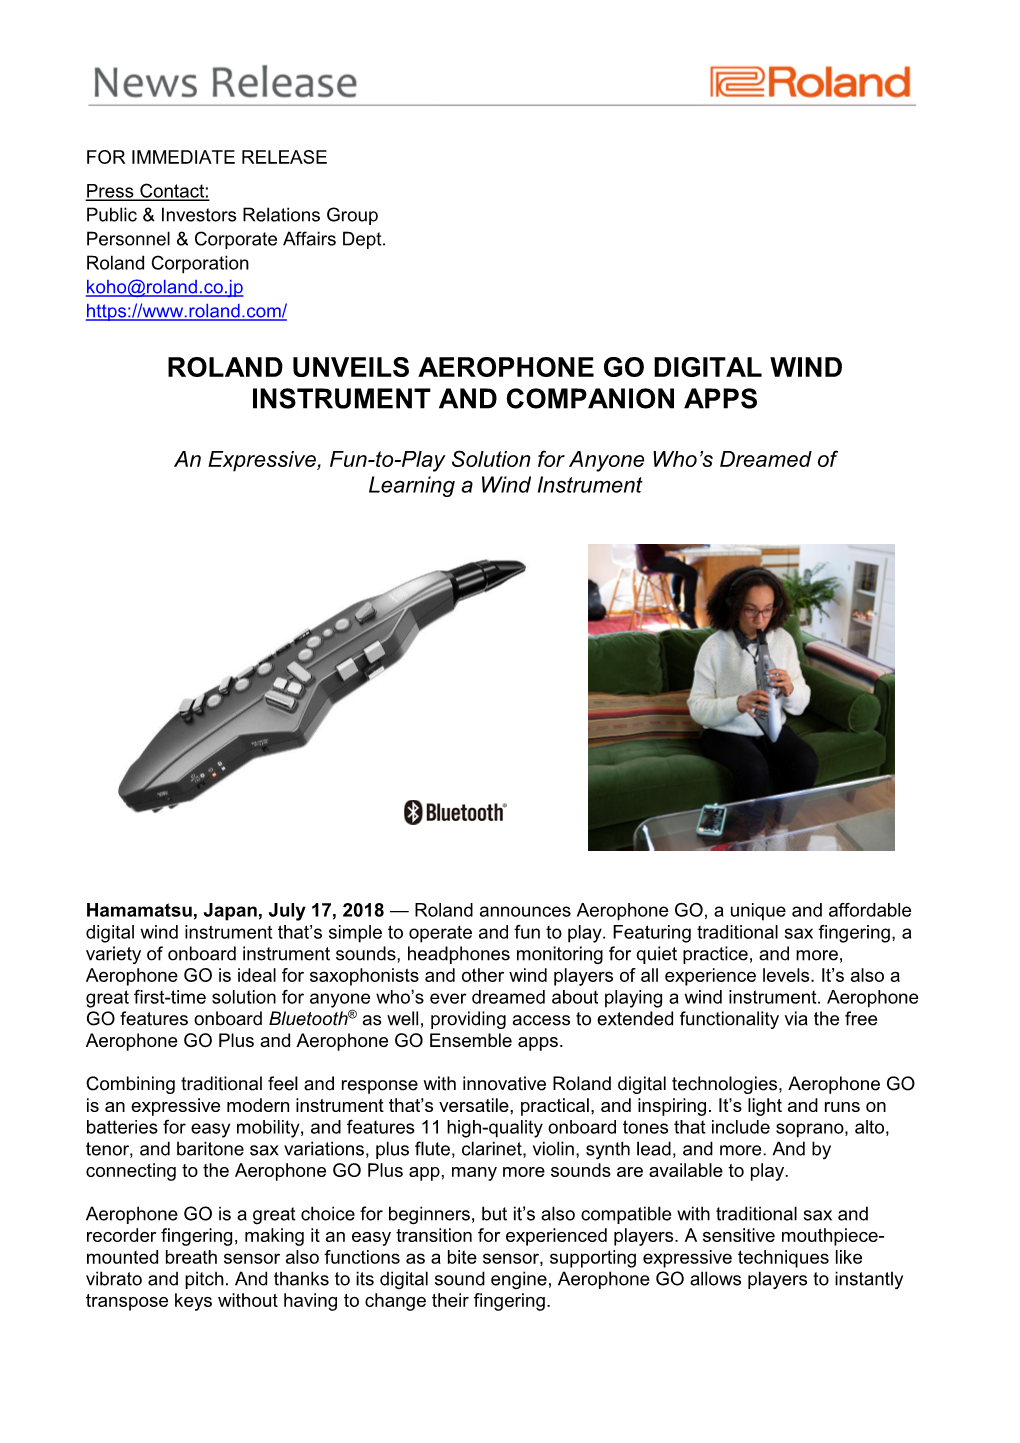 Roland Unveils Aerophone Go Digital Wind Instrument and Companion Apps